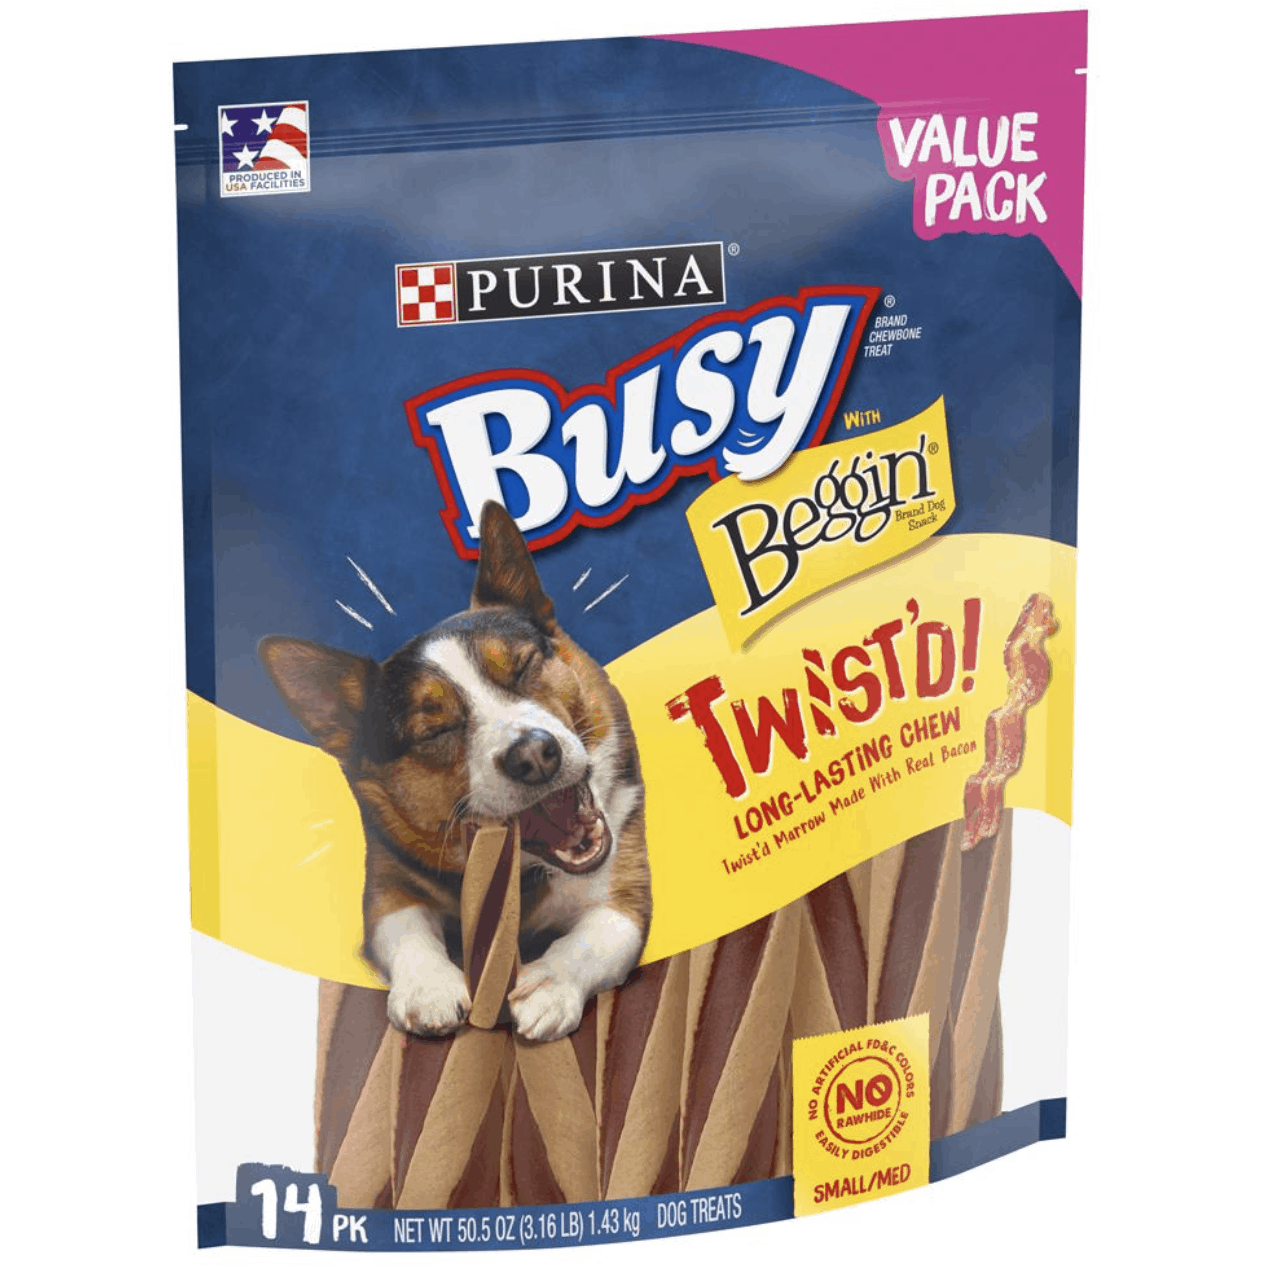 Purina Busy with Beggin' Twist'd Chew Bone Dog Treats Club Pack, 14 ct.